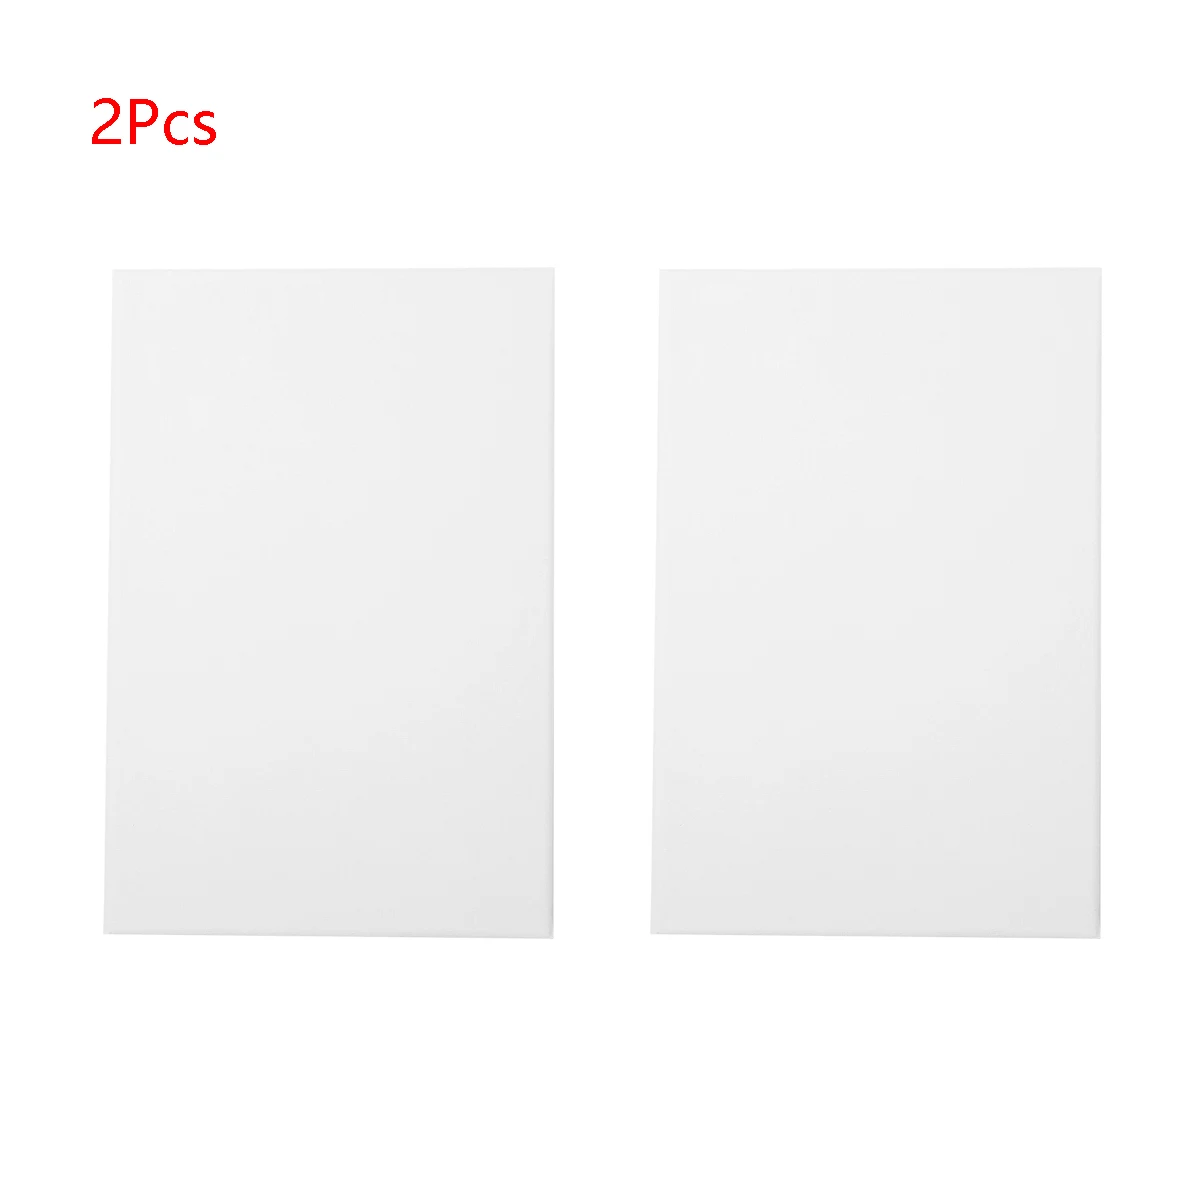 2 PCS 25cm x 30cm Blank Painting Canvas Panel 